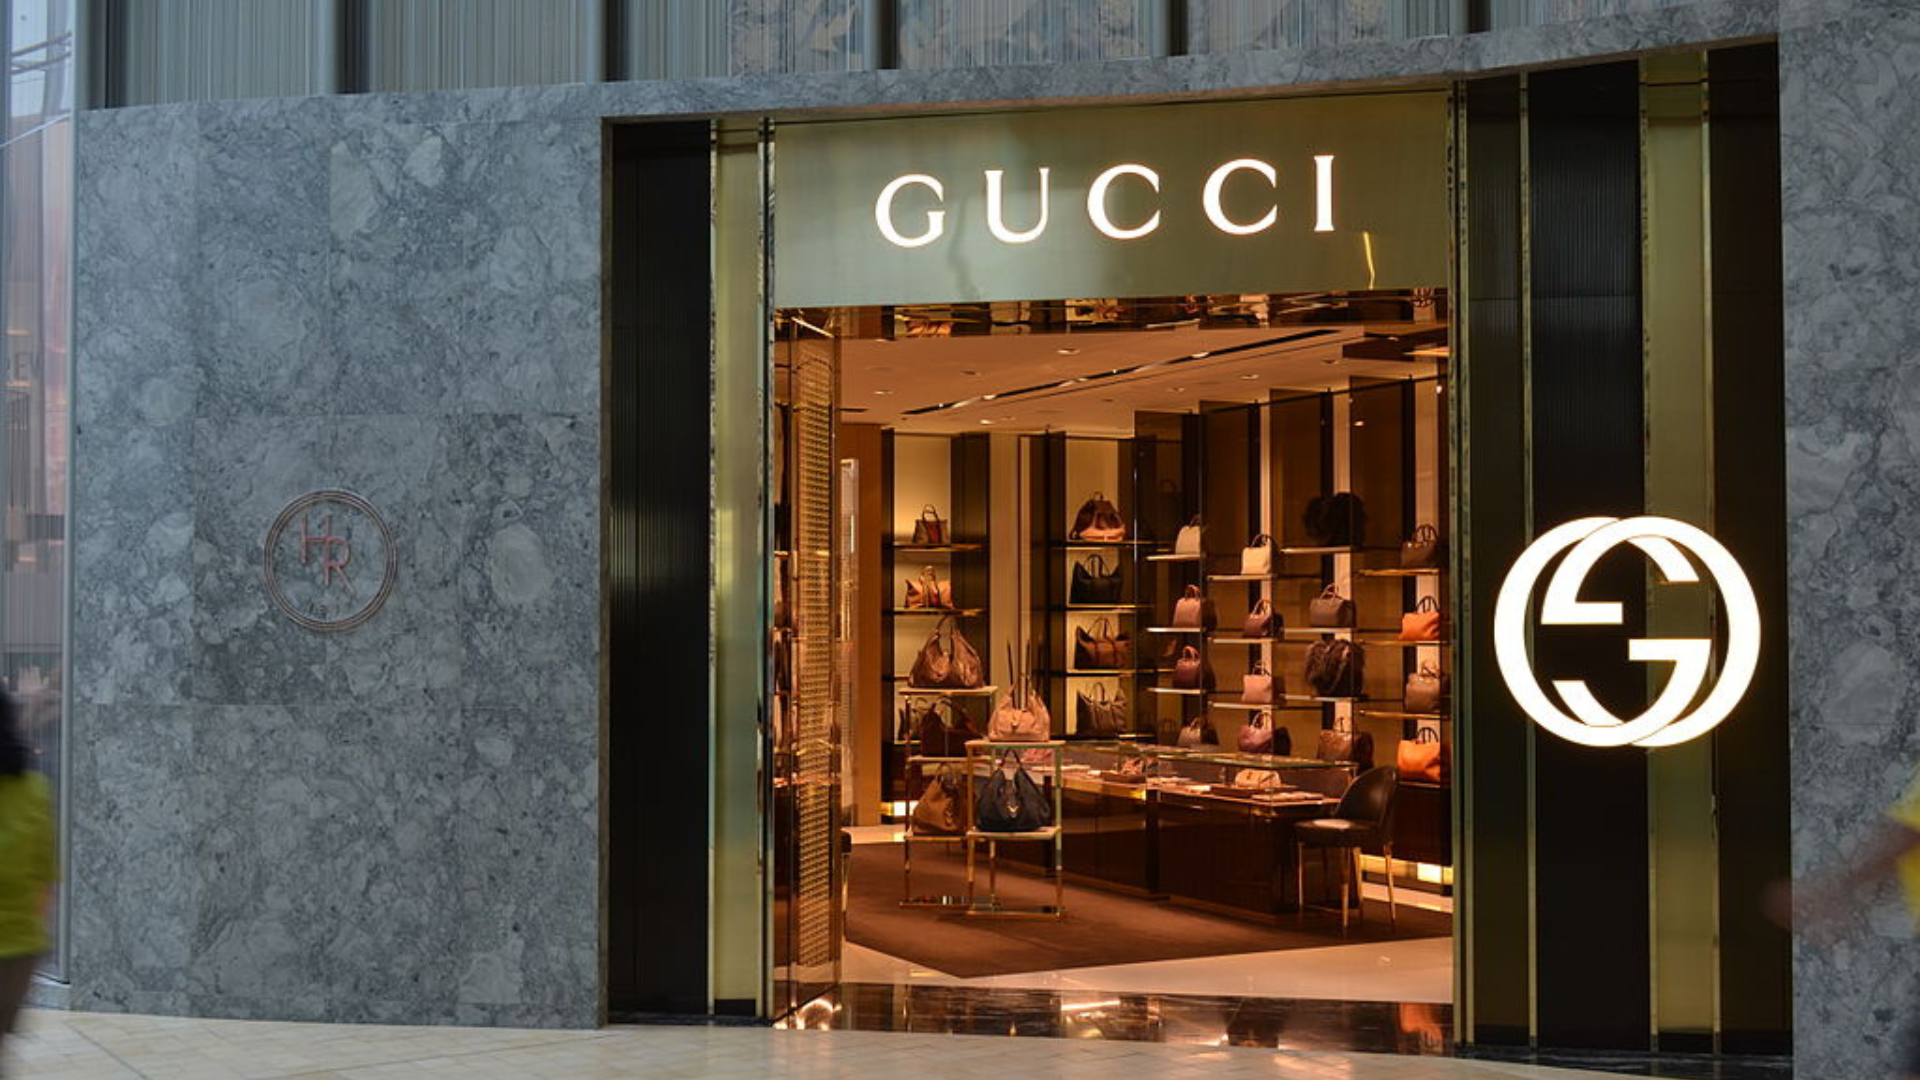 Ilustrasi brand fashion Gucci. Sumber: Wikimedia Commons.